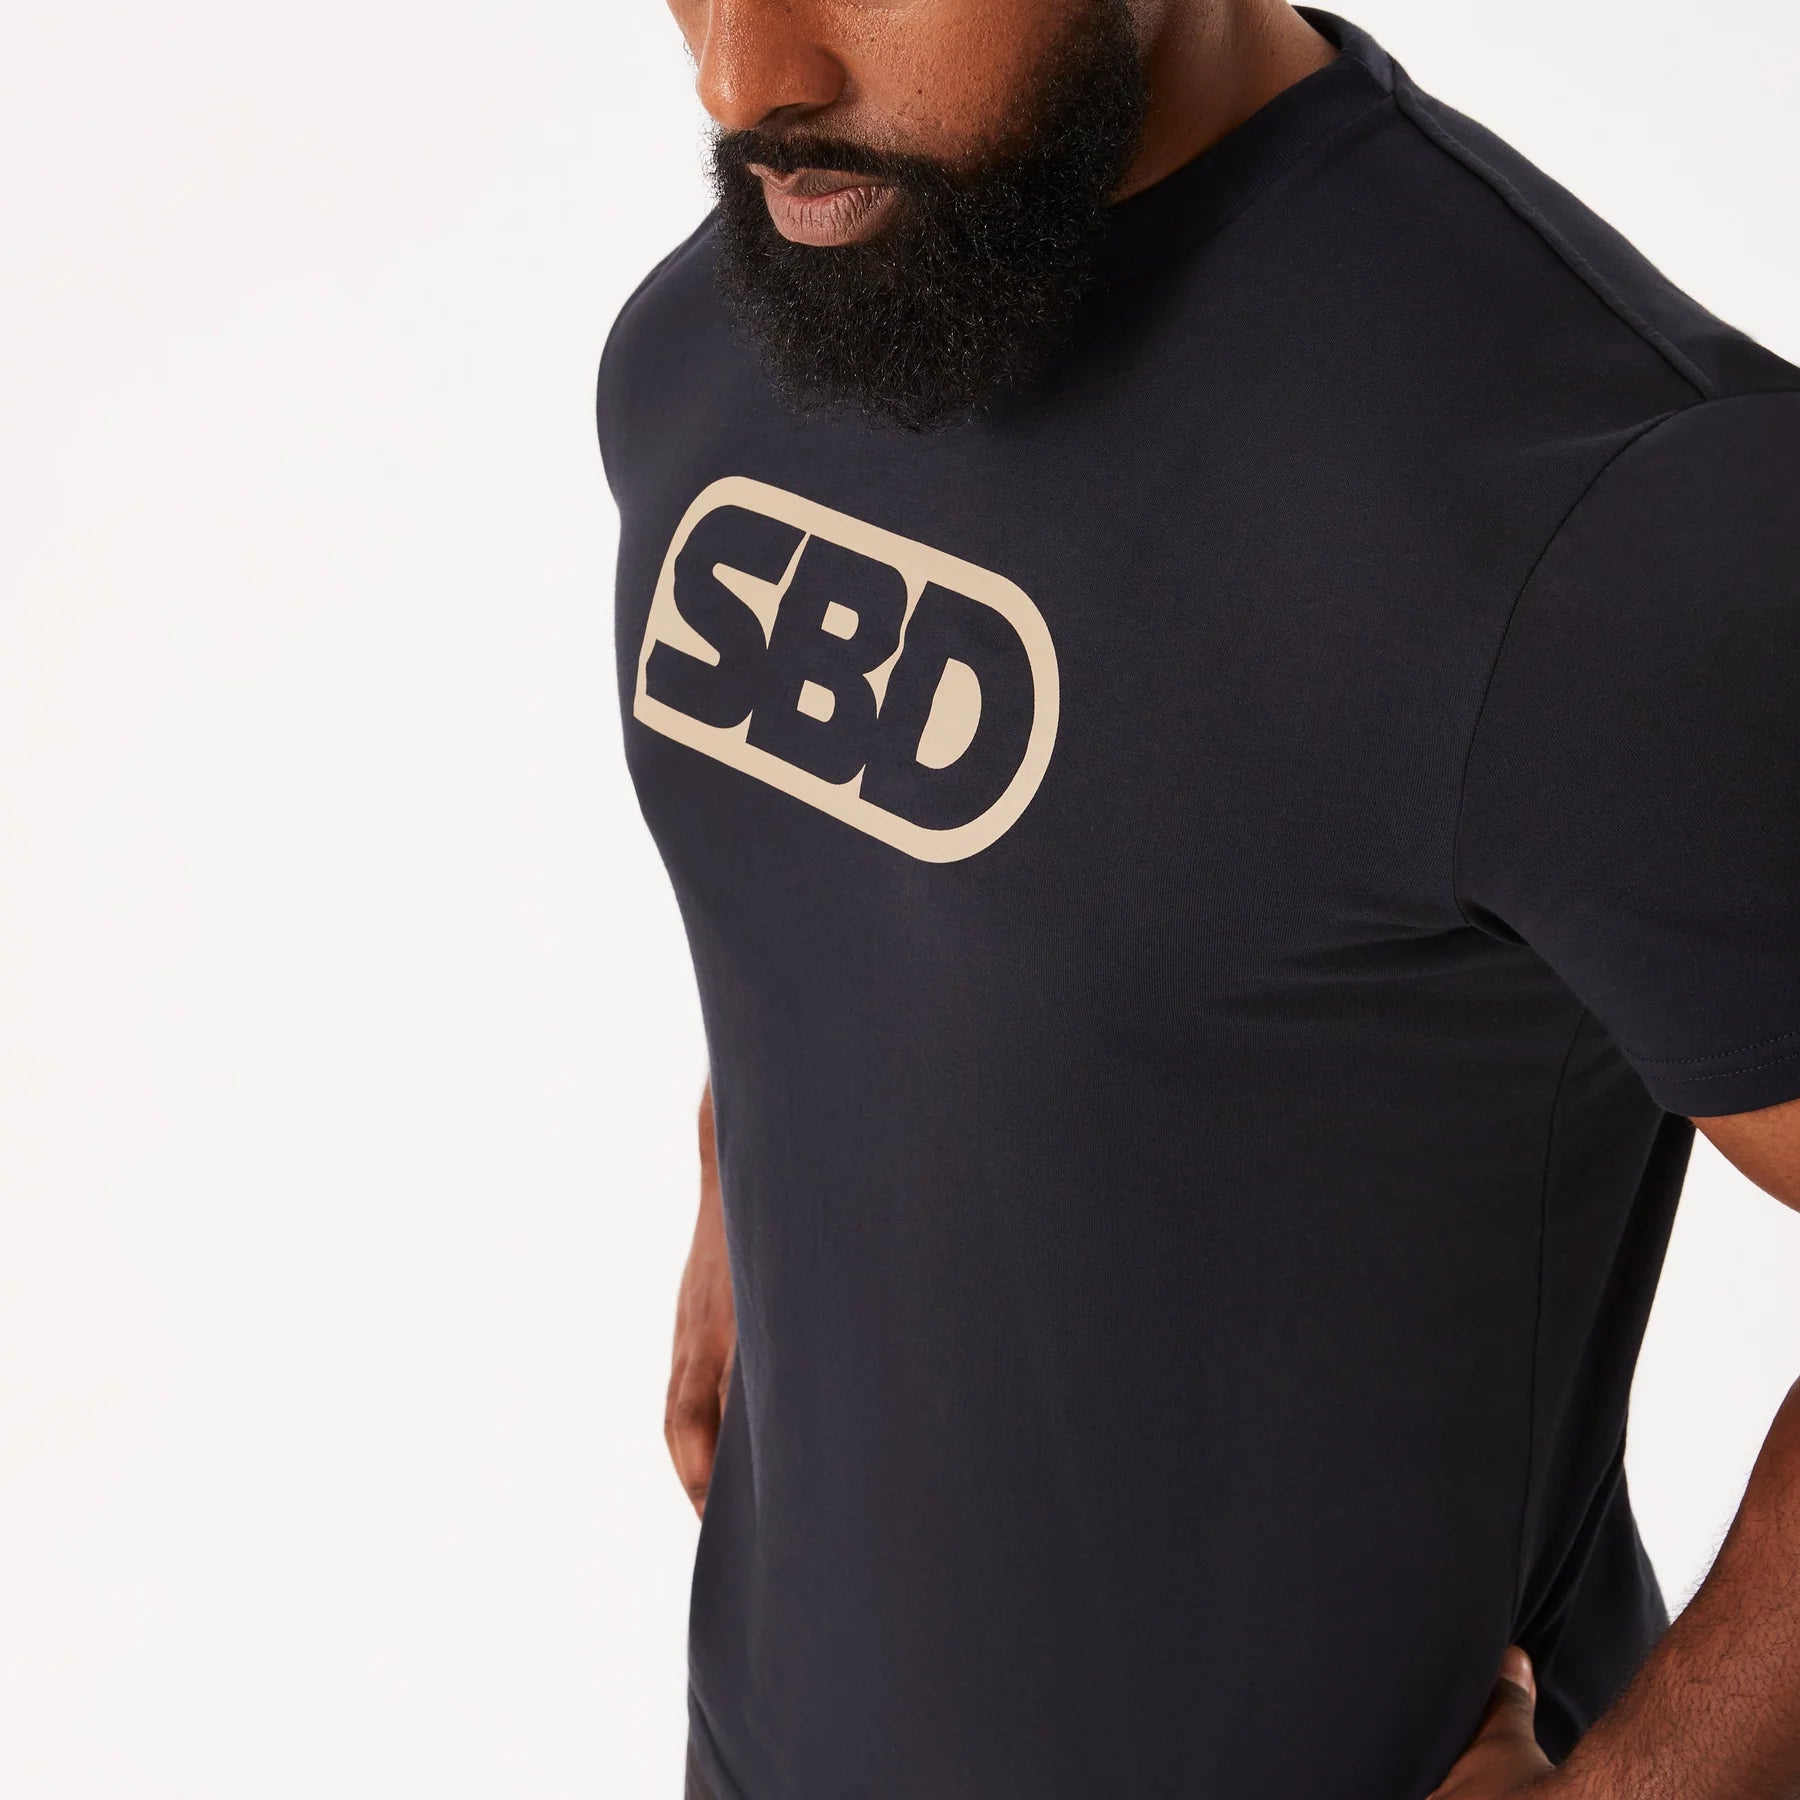 SBD Defy T-shirt (Men's)